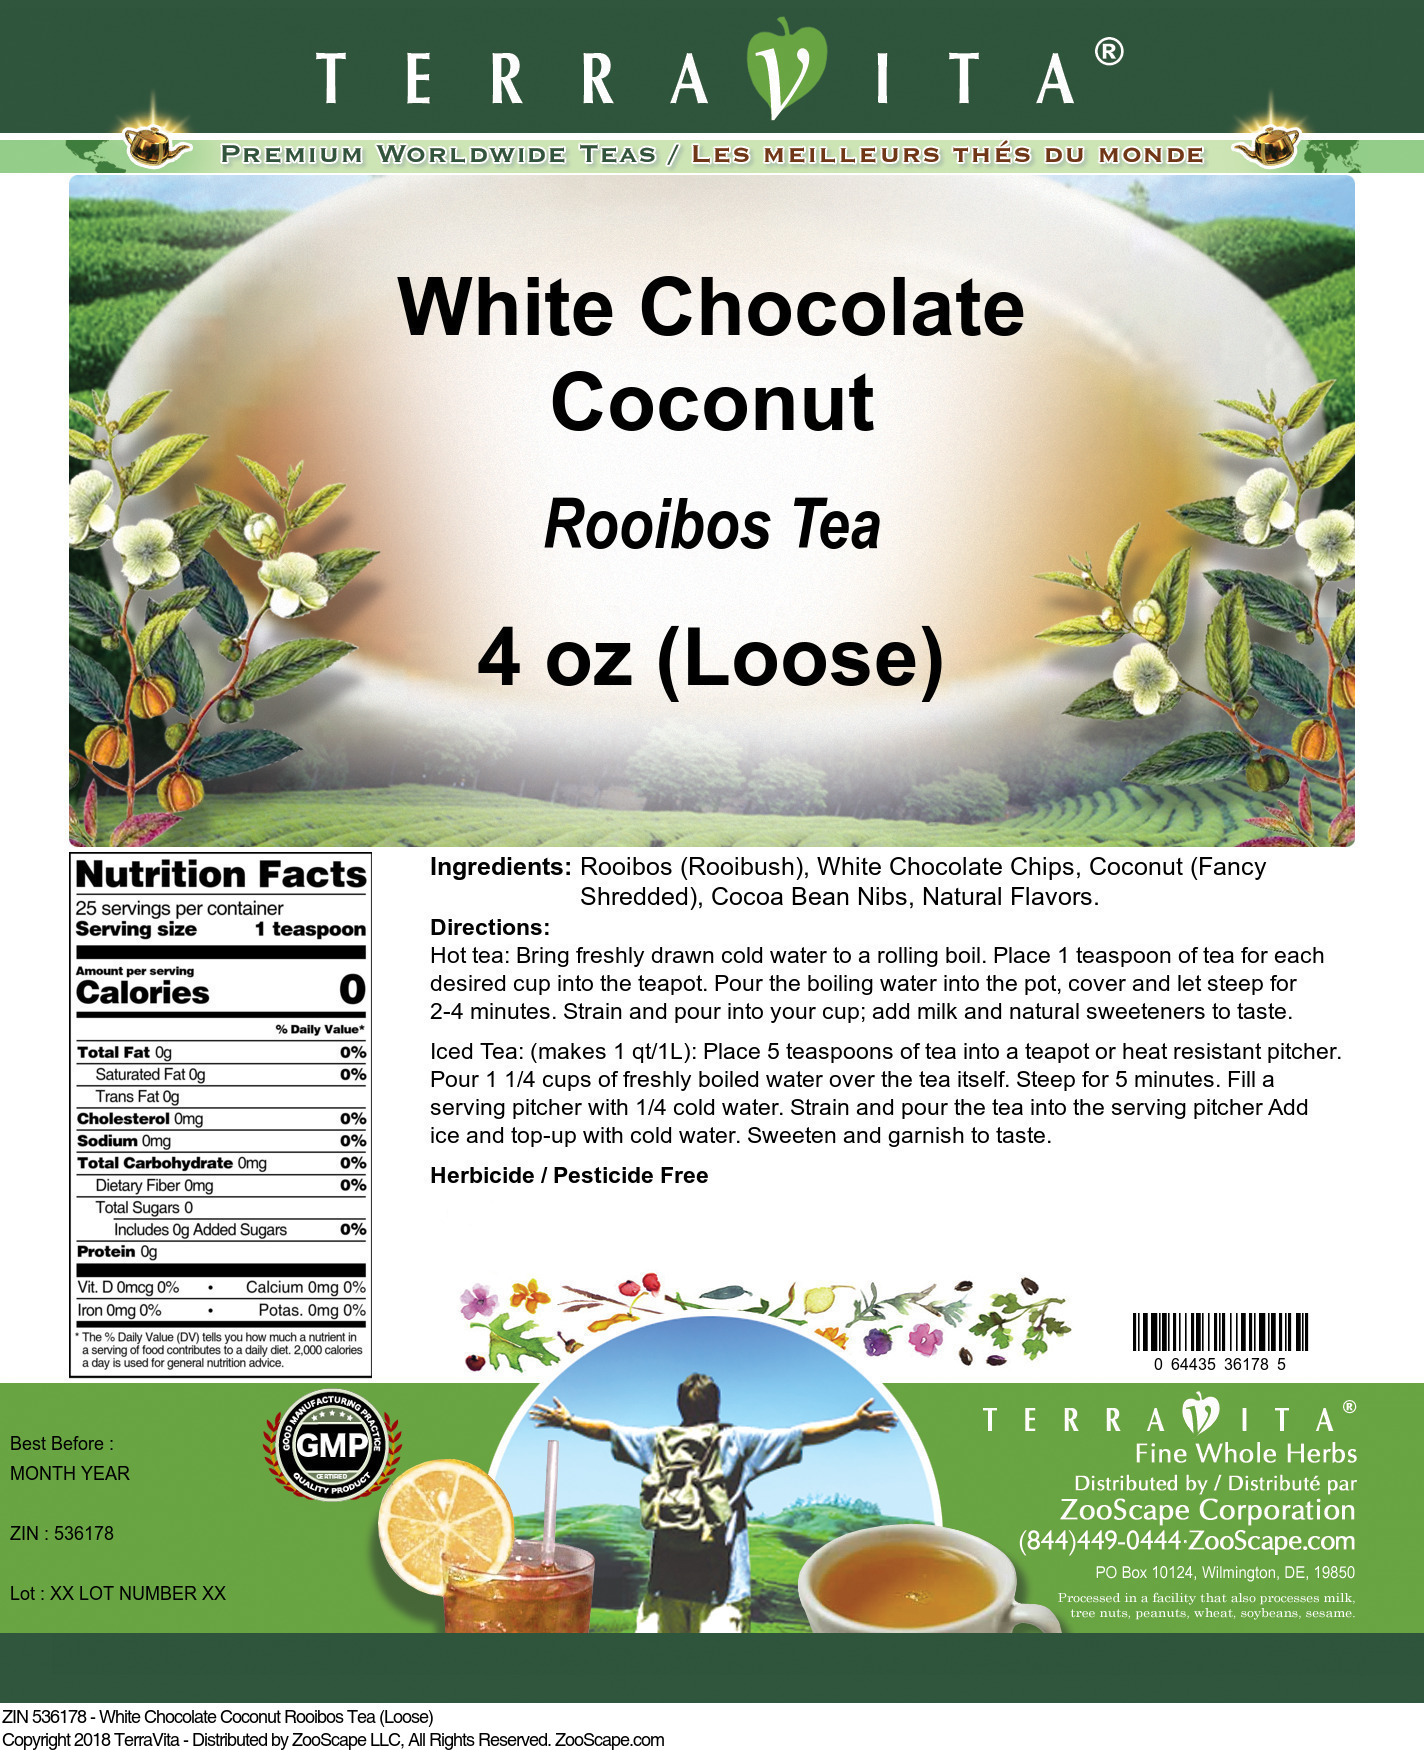 White Chocolate Coconut Rooibos Tea (Loose) - Label